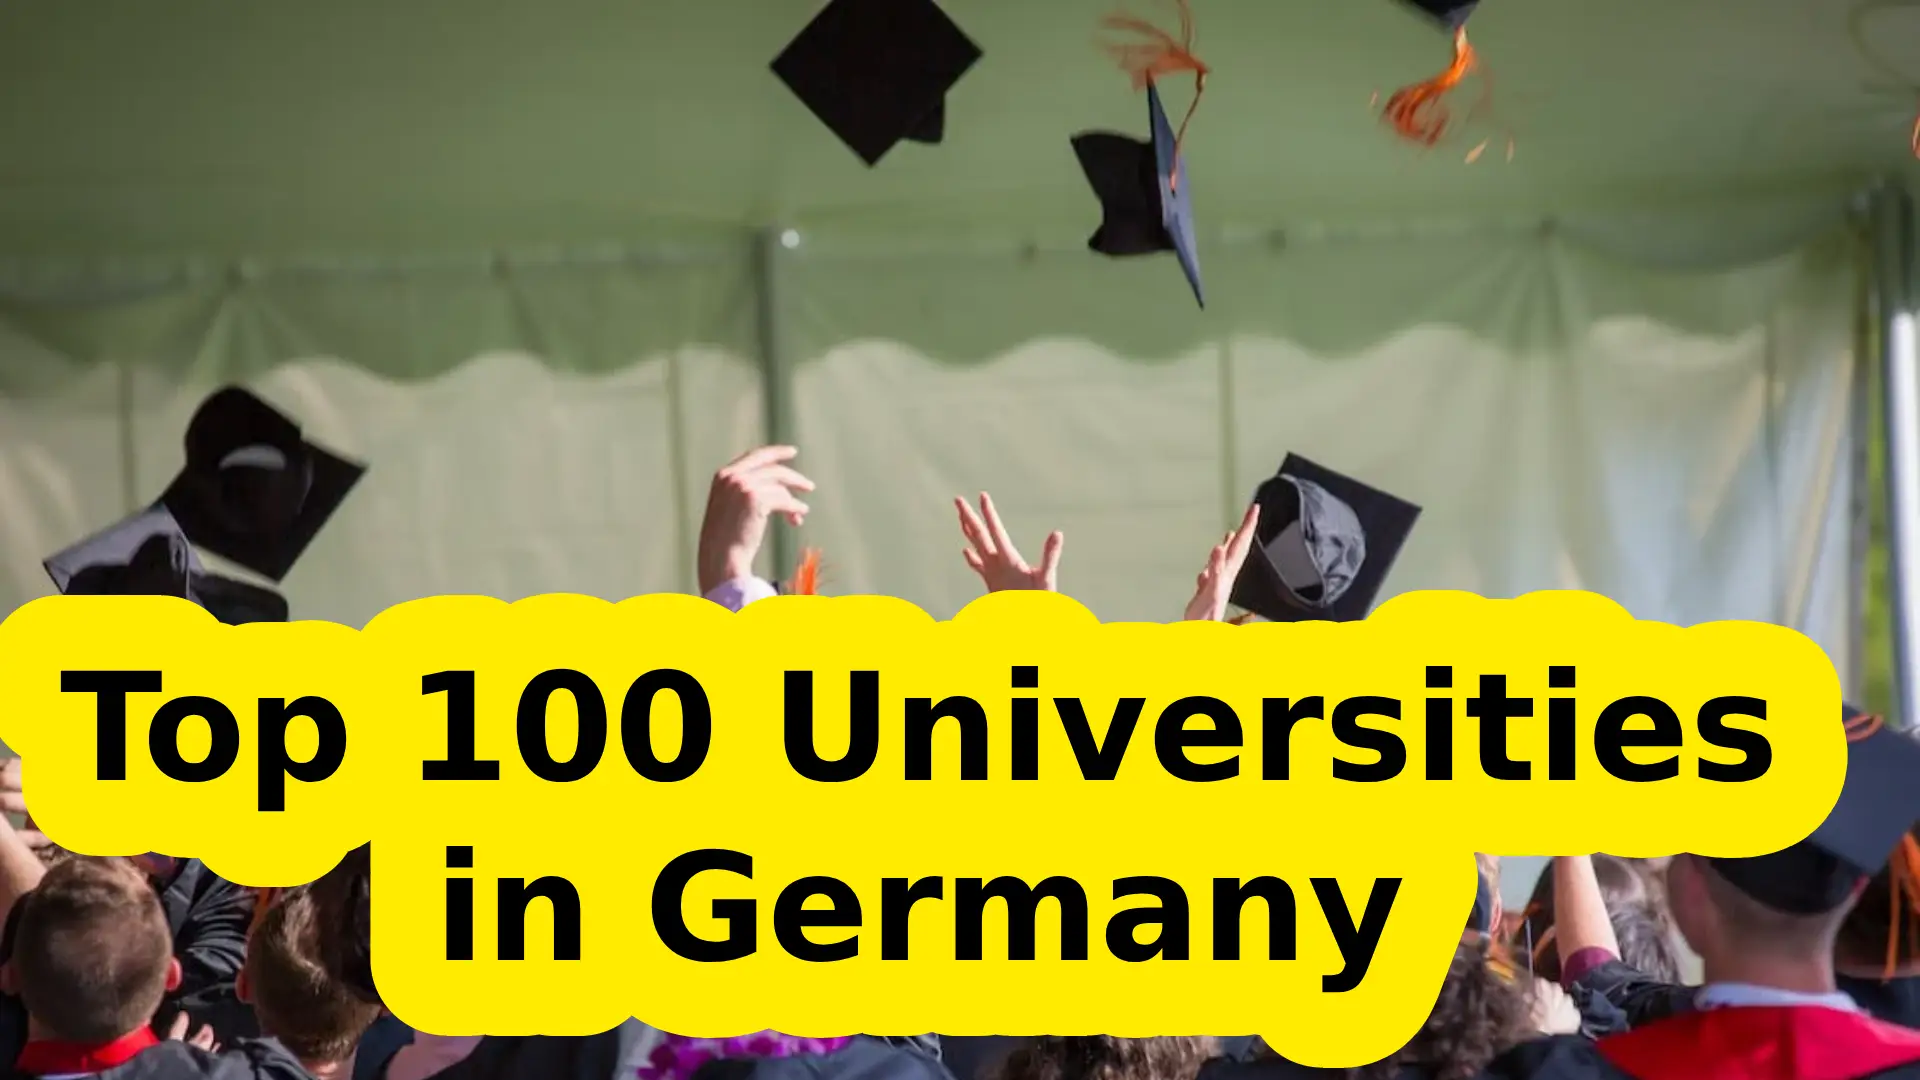 Munich top 100 universities in germany, top 10 universities in germany, top 20 universities in germany, top universities in germany 2023, top 100 universities in the world, top universities in germany for international students, top universities in germany for masters, top universities in germany for engineering